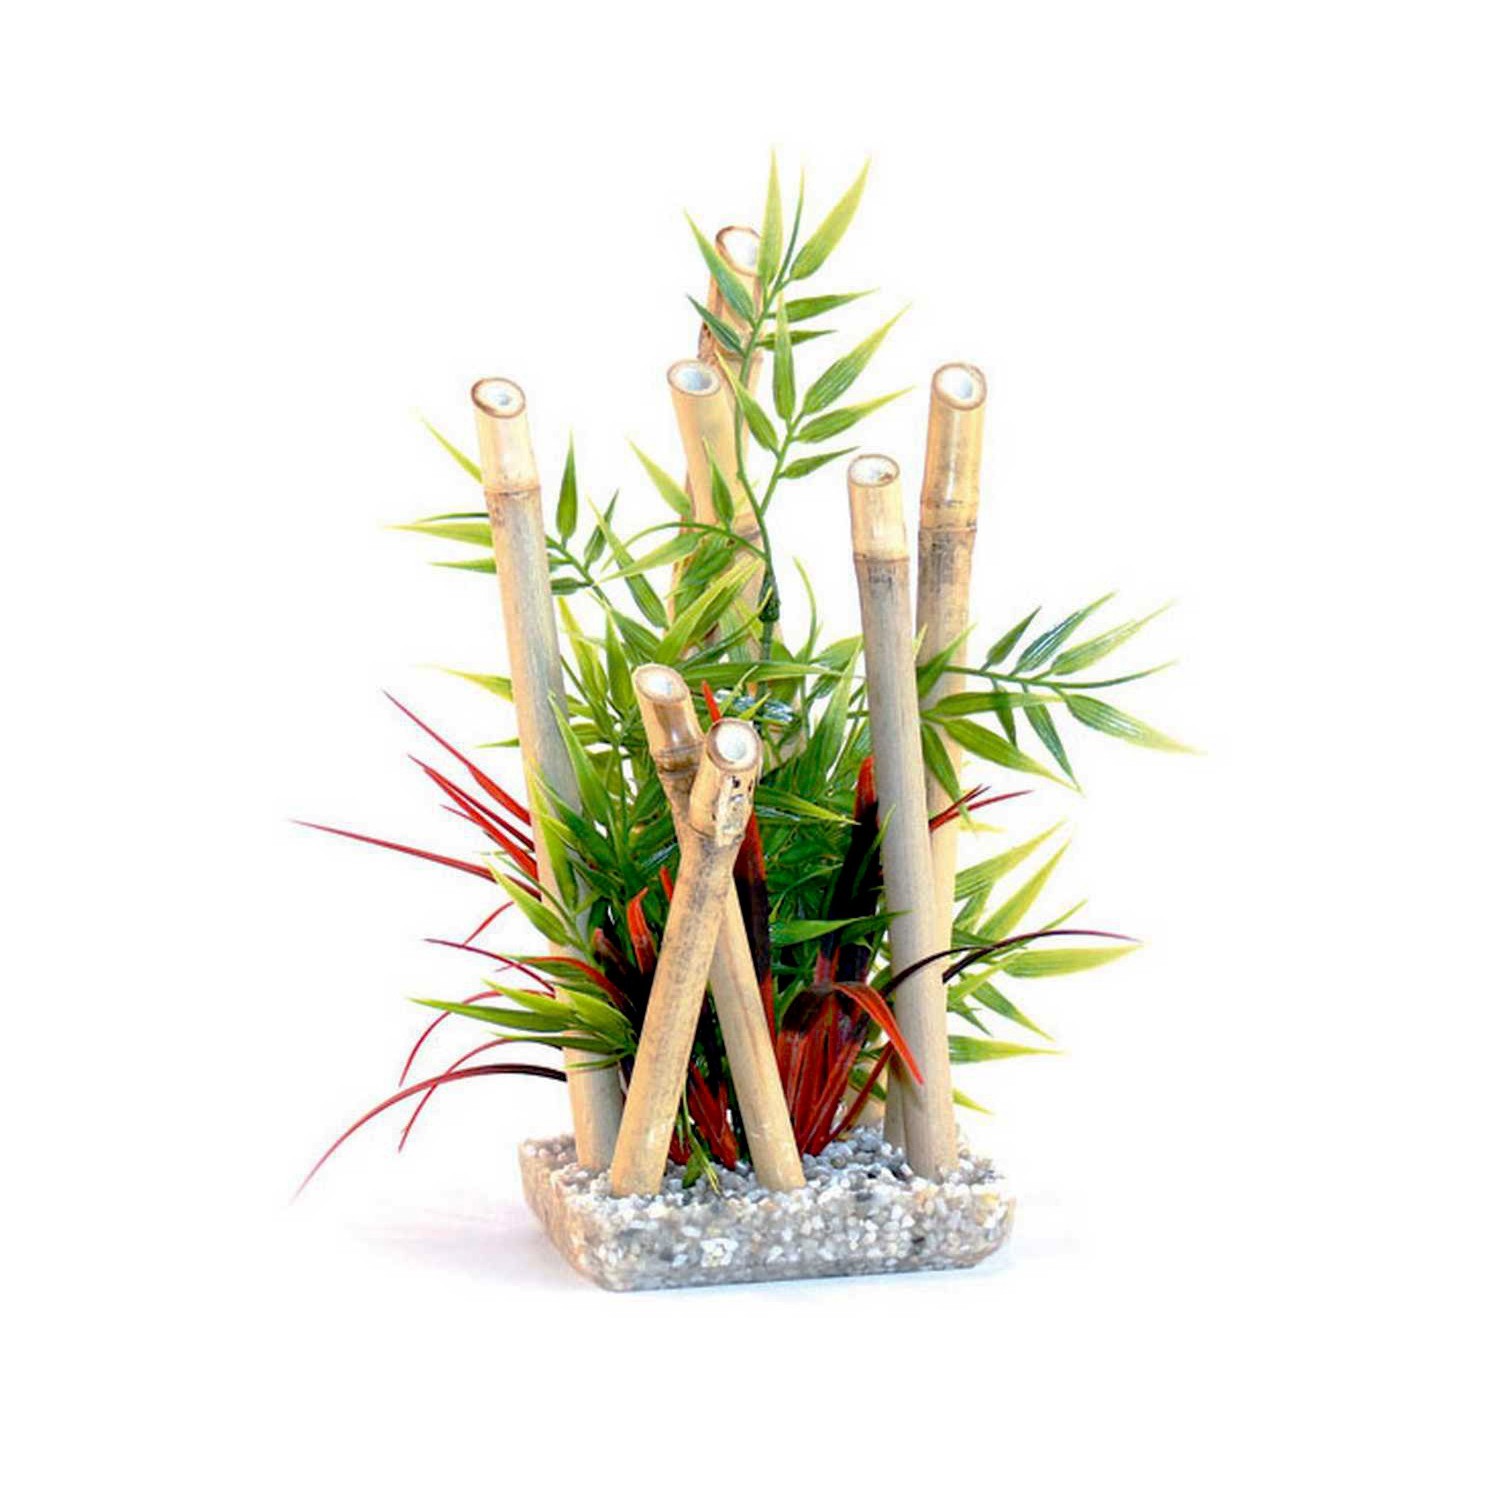 Sydeco Bamboo and Plant Aquarium Ornament Image